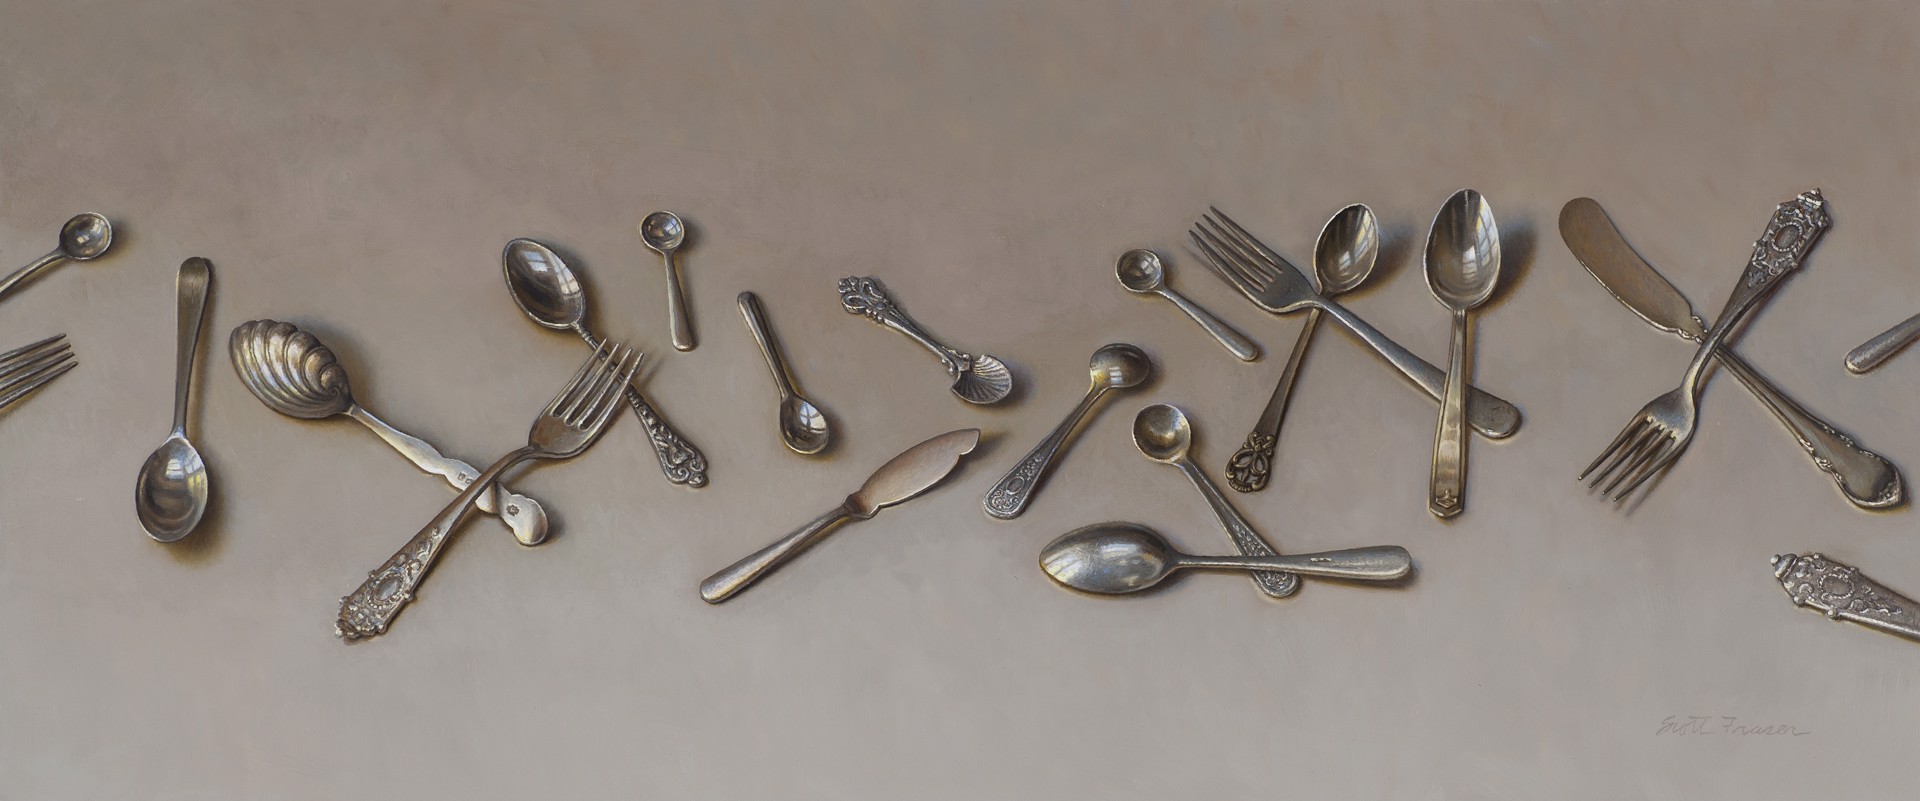 Spoons, Forks, Knives by Scott Fraser